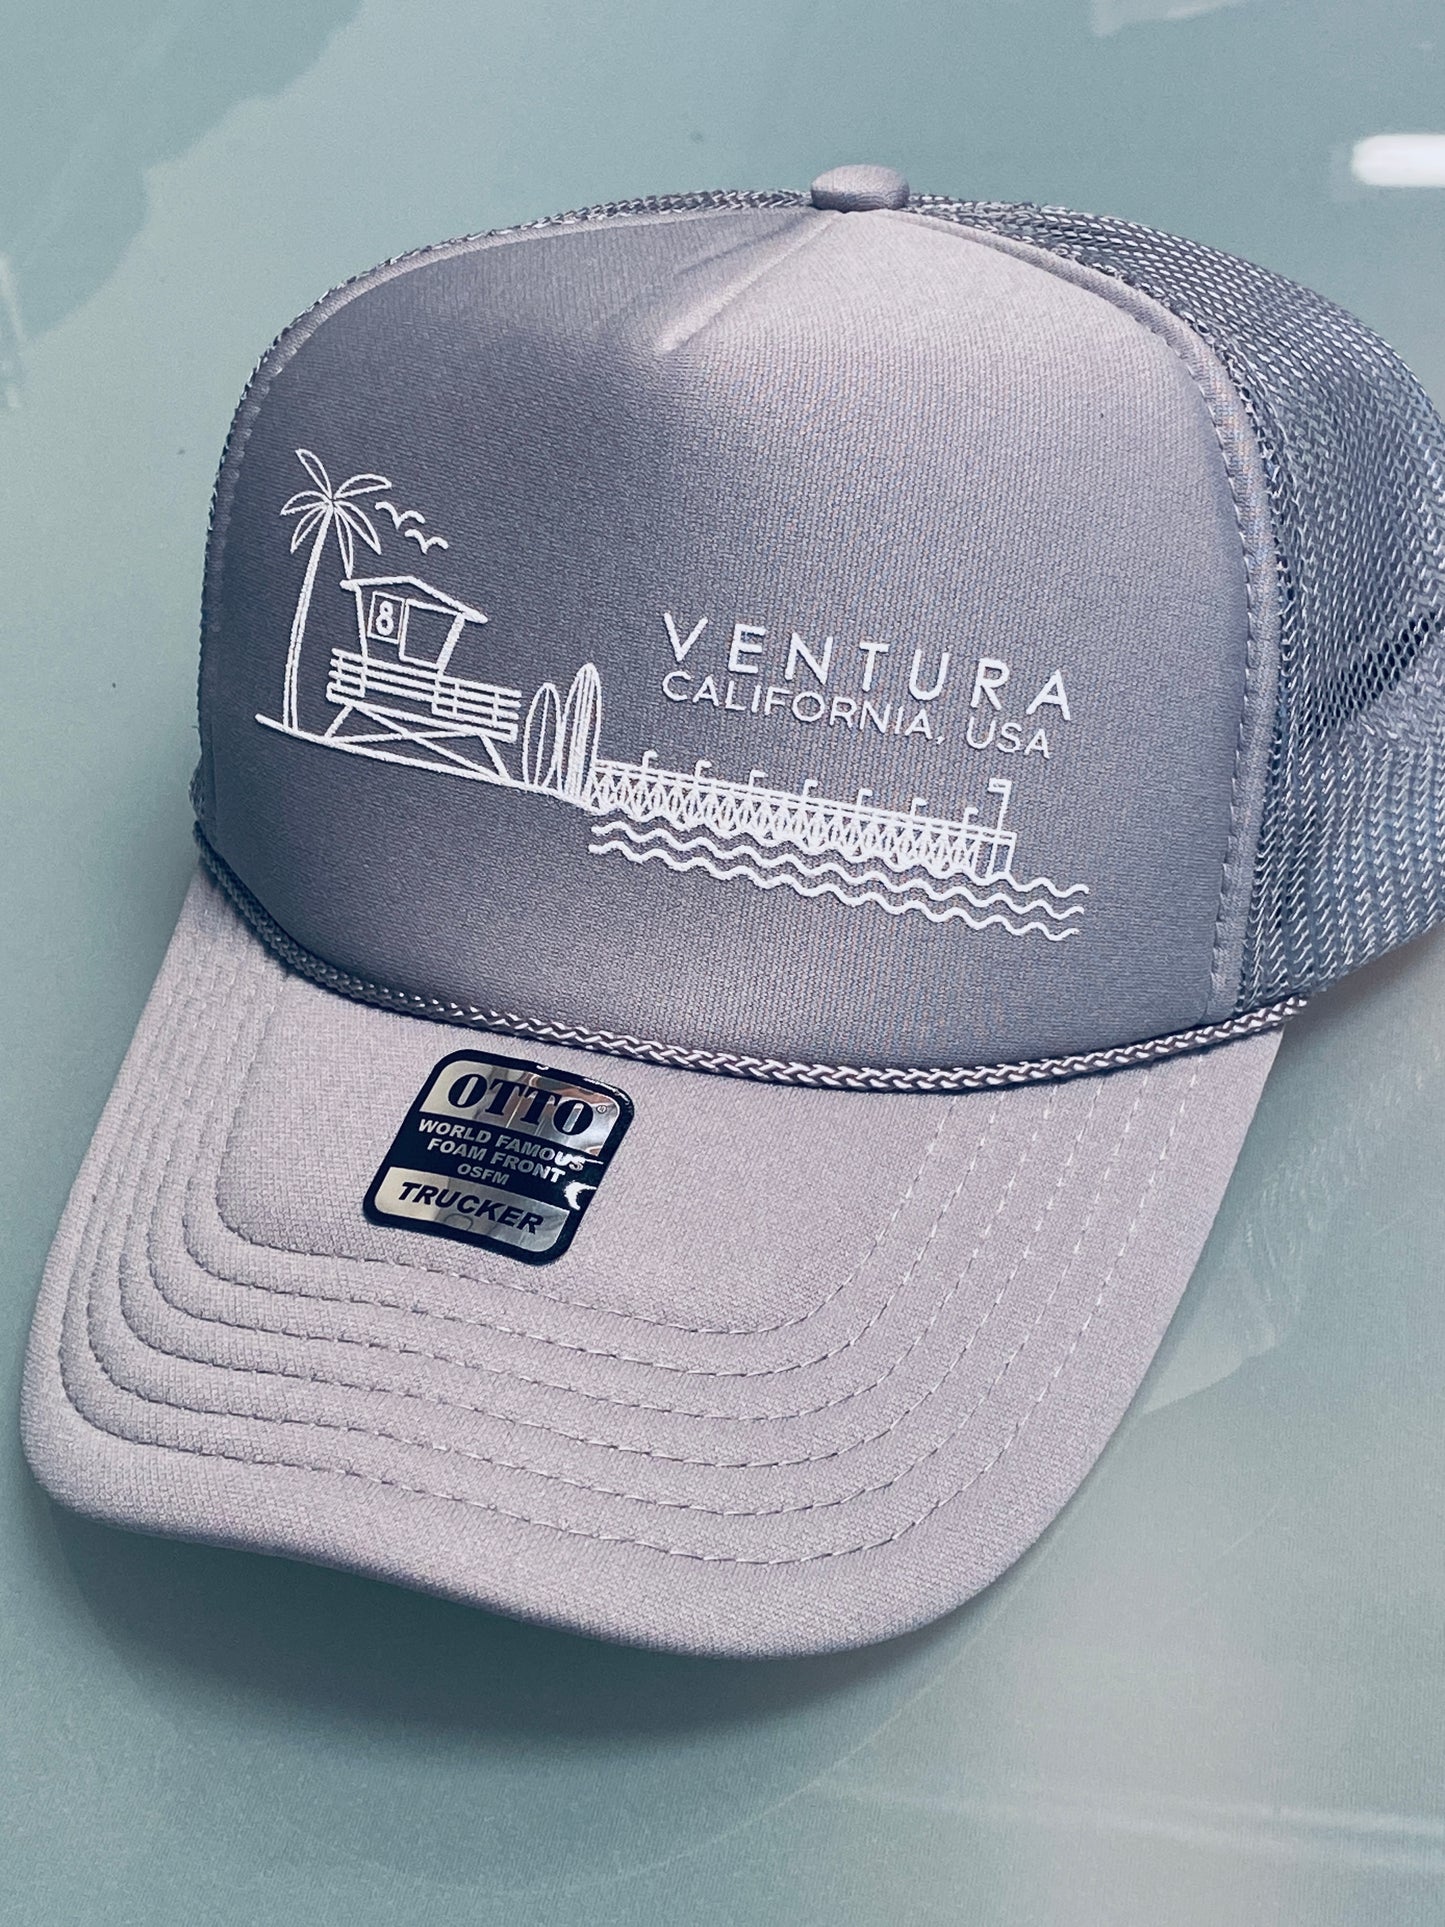 Ventura Beach trucker hat